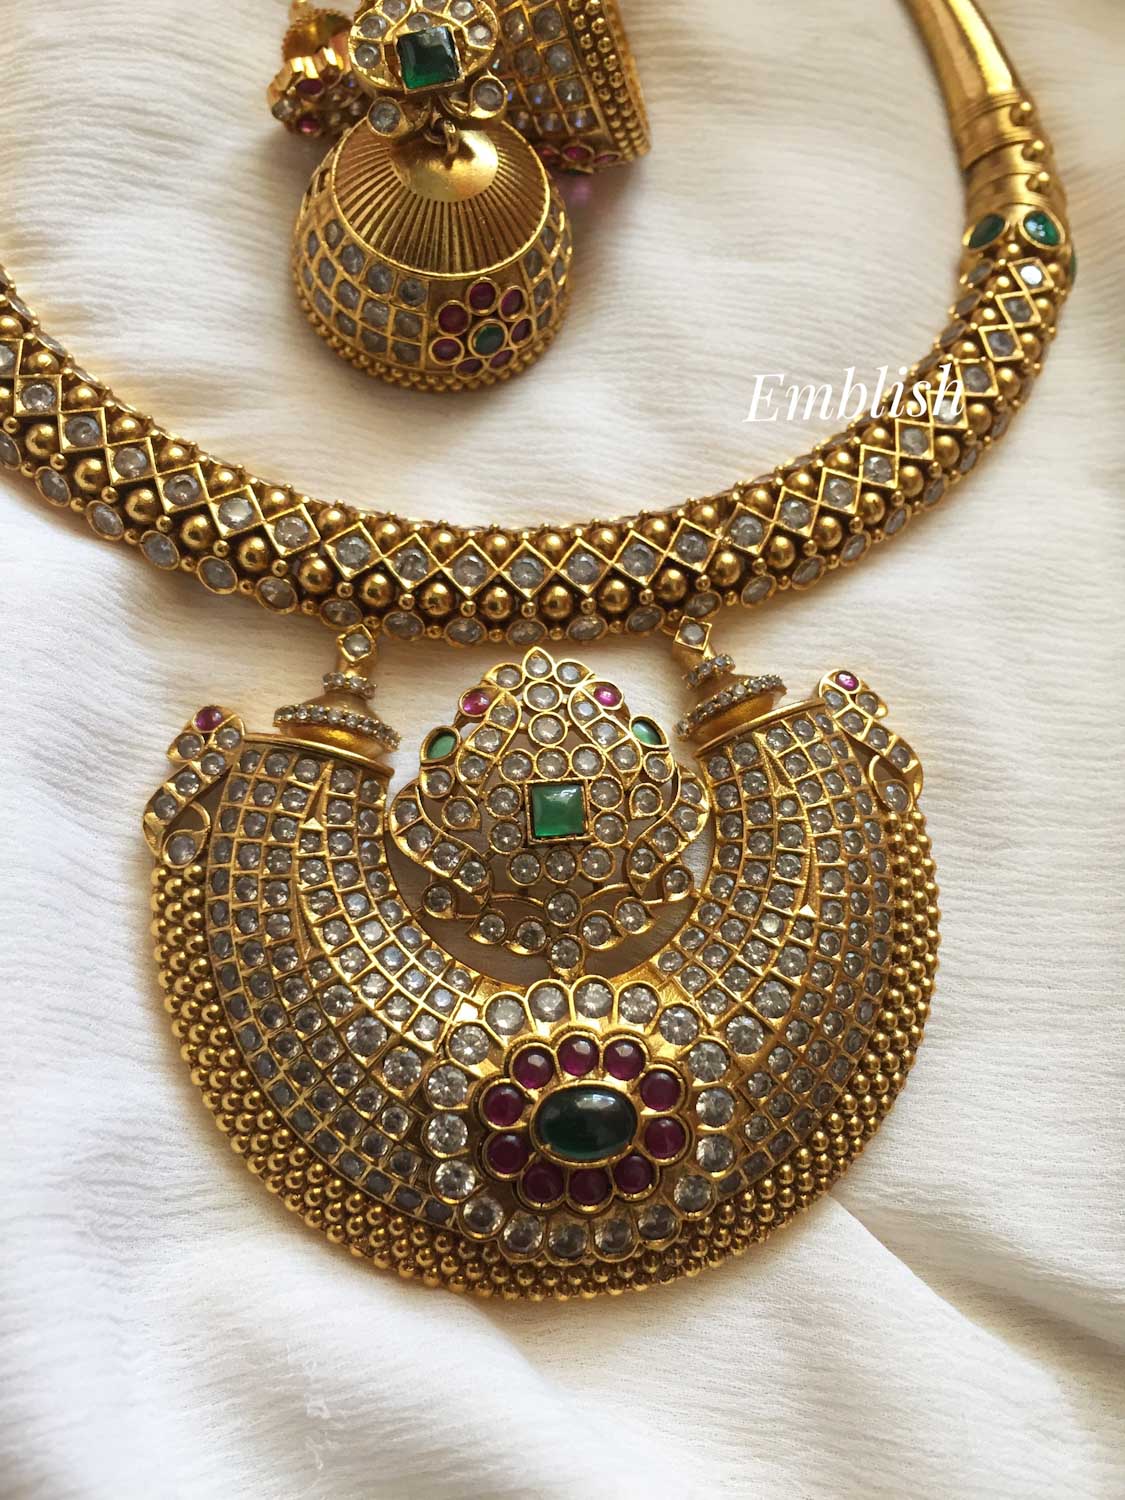 Ad stones Embedded  grand hasli neckpiece 